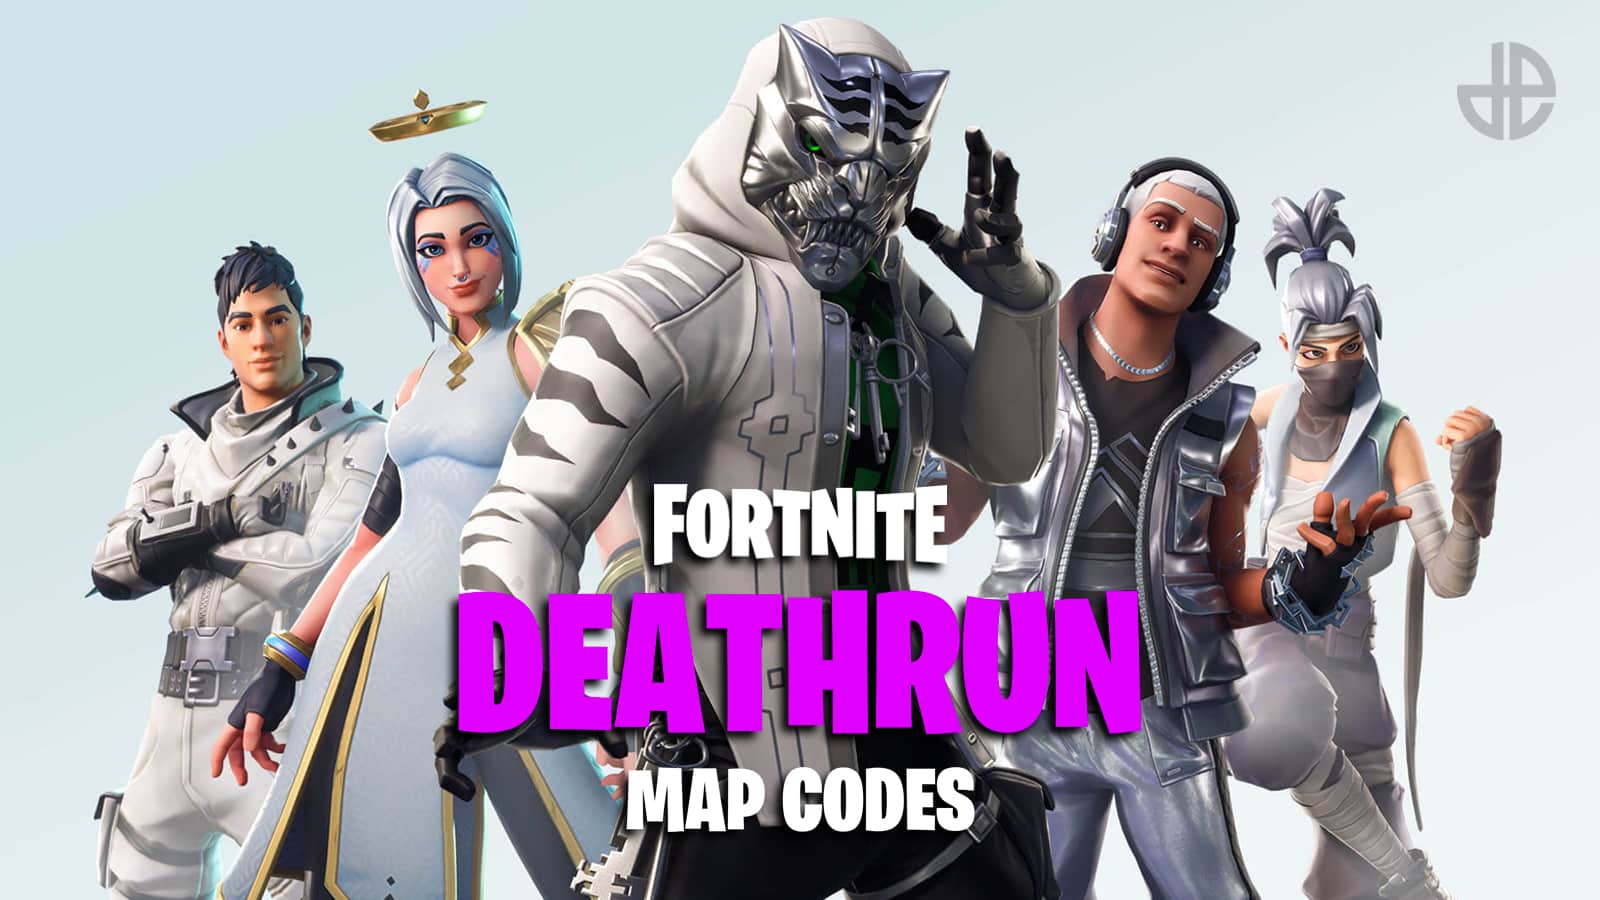 Fortnite Deathrun Map Codes